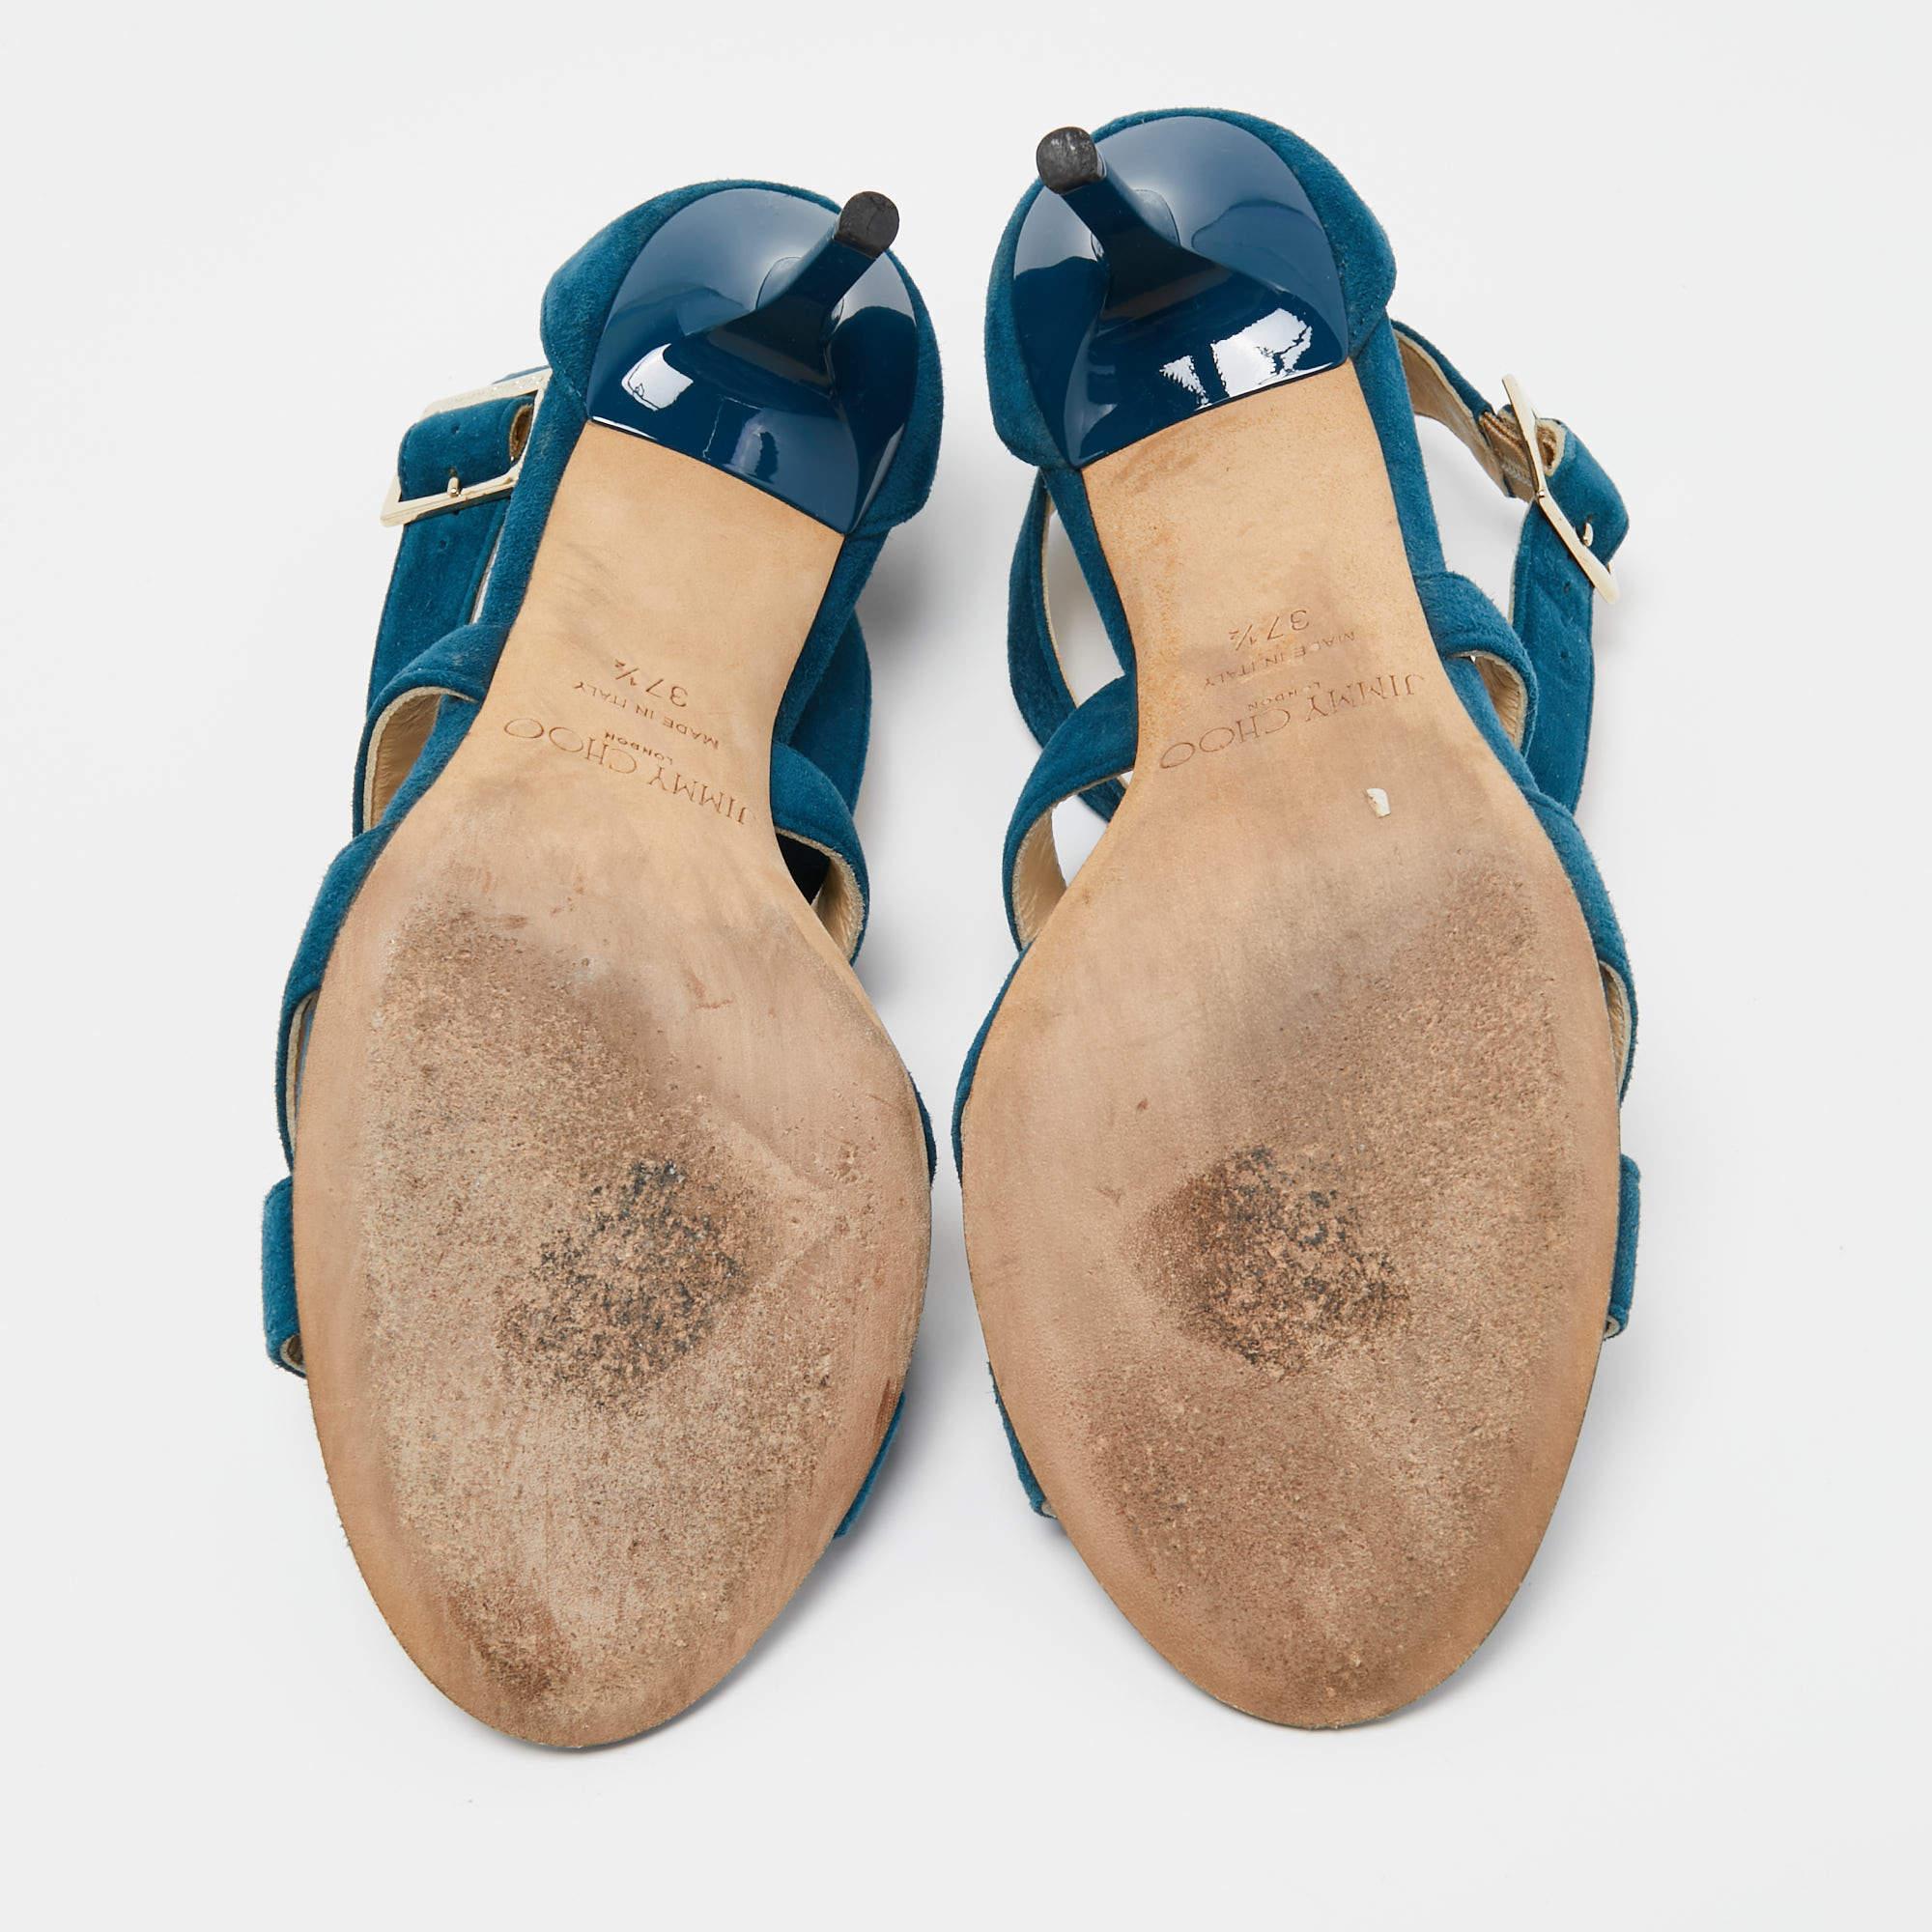 Jimmy Choo Teal Suede Lottie Sandals Size 37.5 For Sale 2